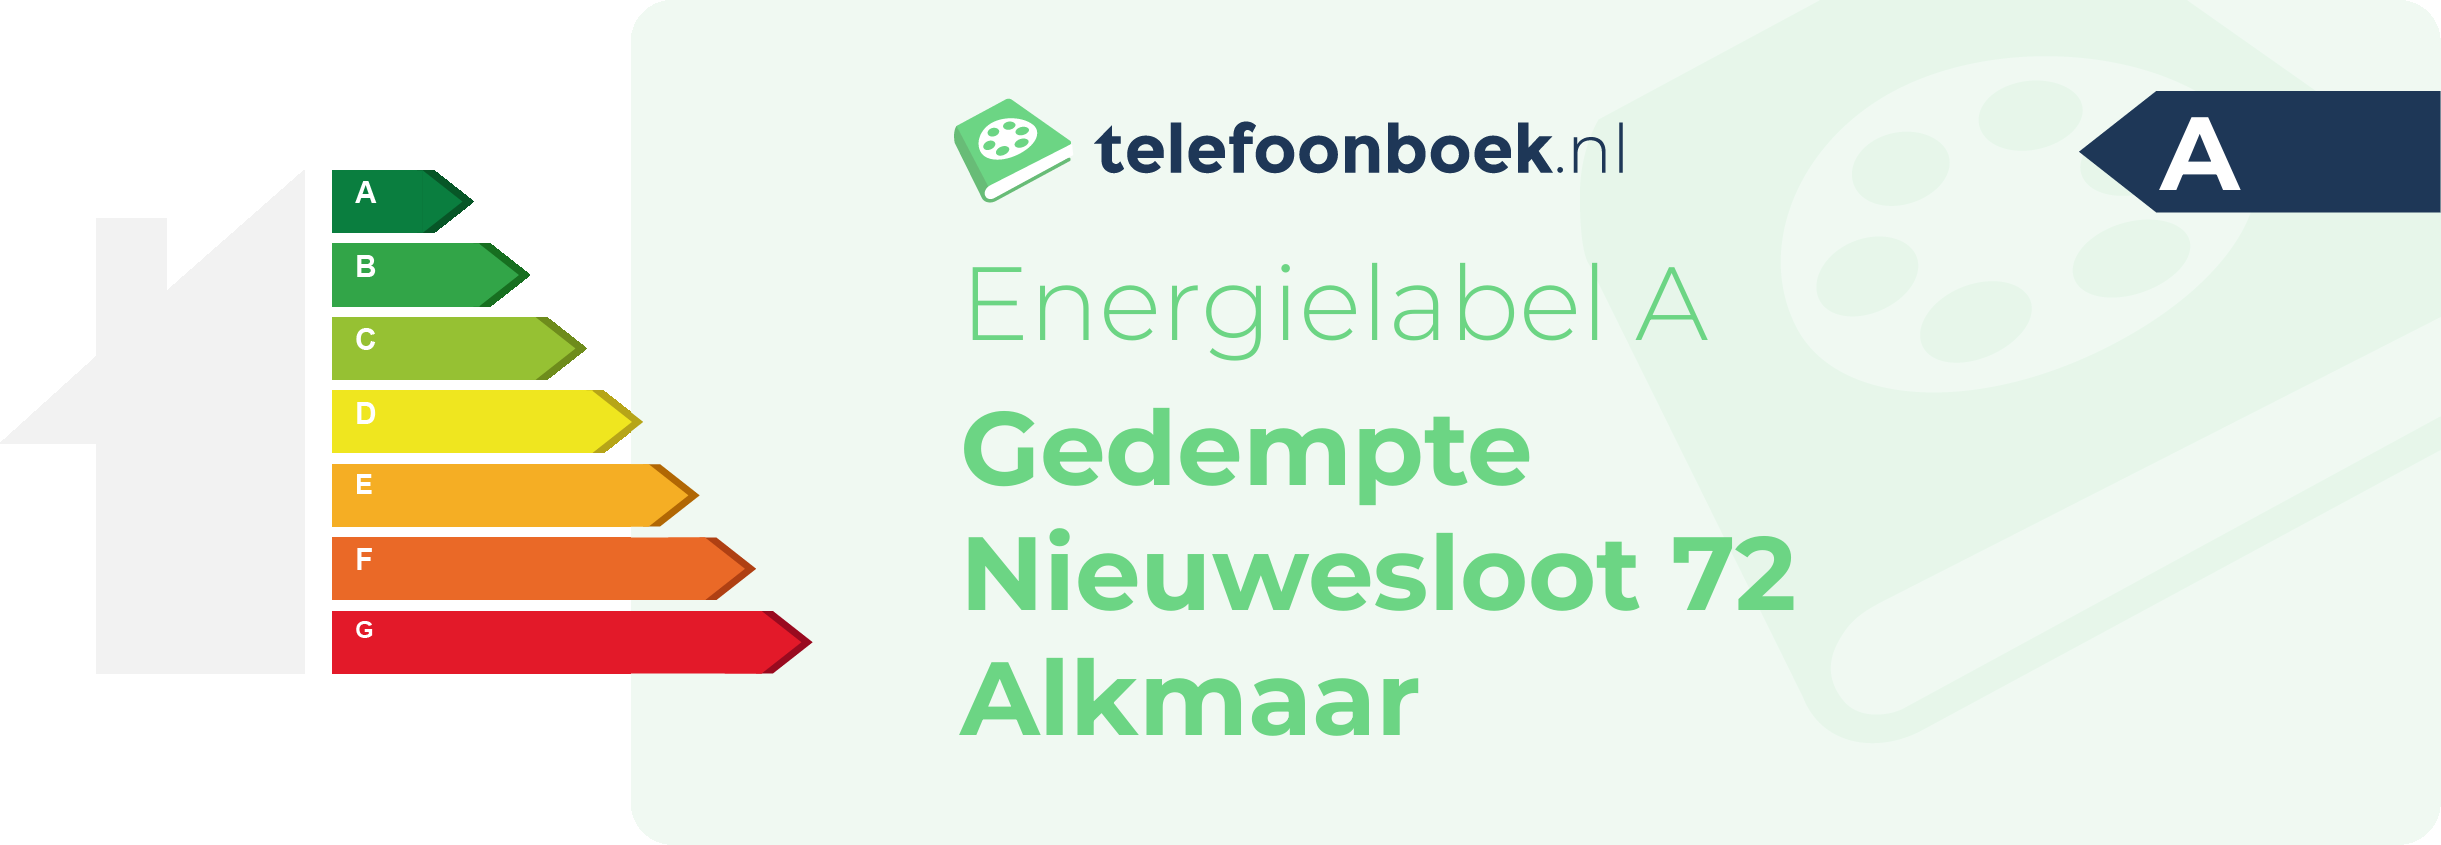 Energielabel Gedempte Nieuwesloot 72 Alkmaar